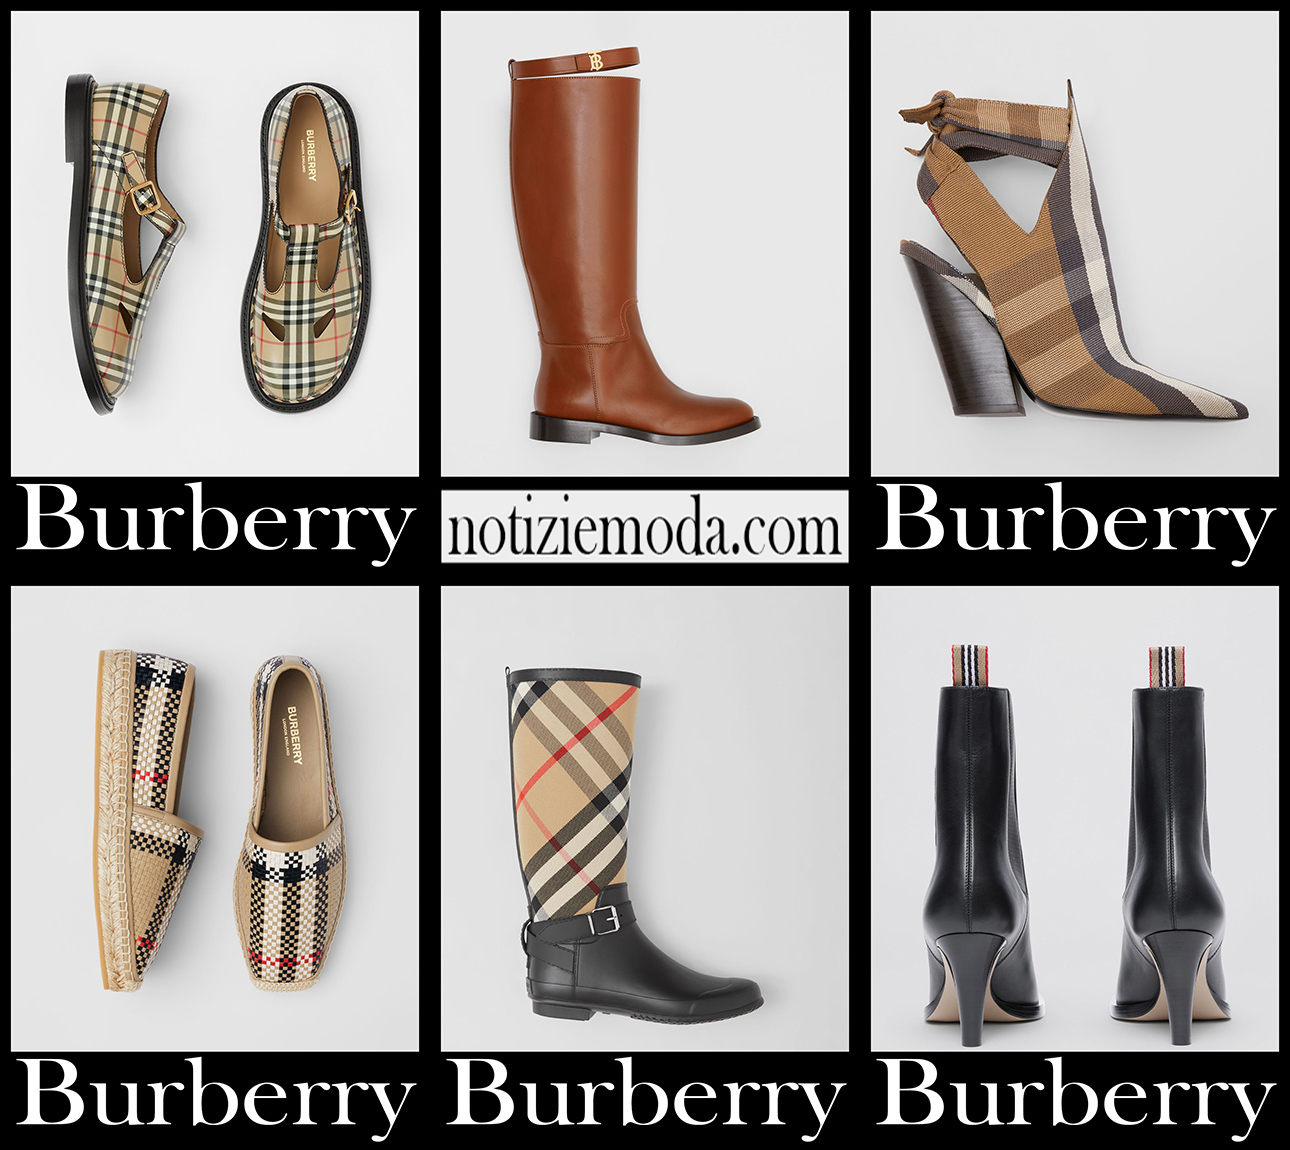 Nuovi arrivi scarpe Burberry 2021 calzature moda donna